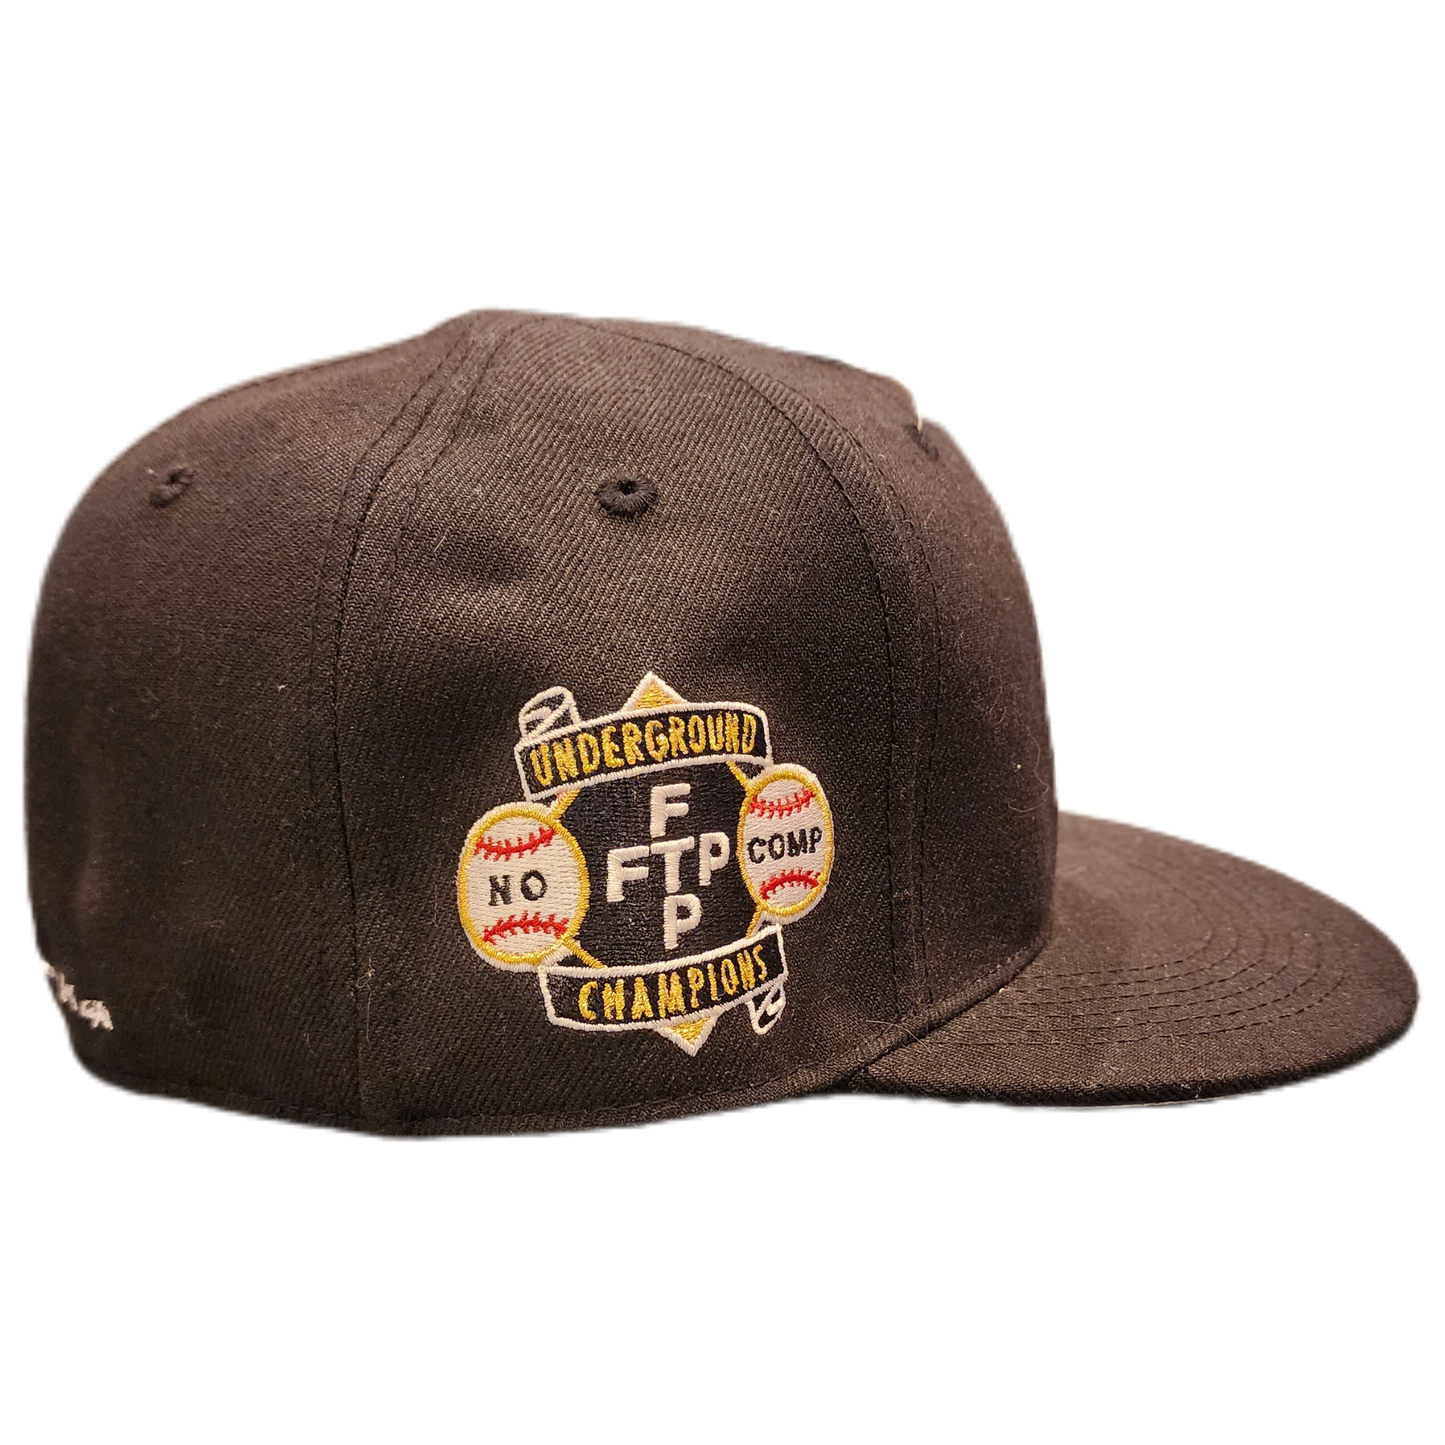 FTP - "Underground Champions Hat" - Size 7 3/4